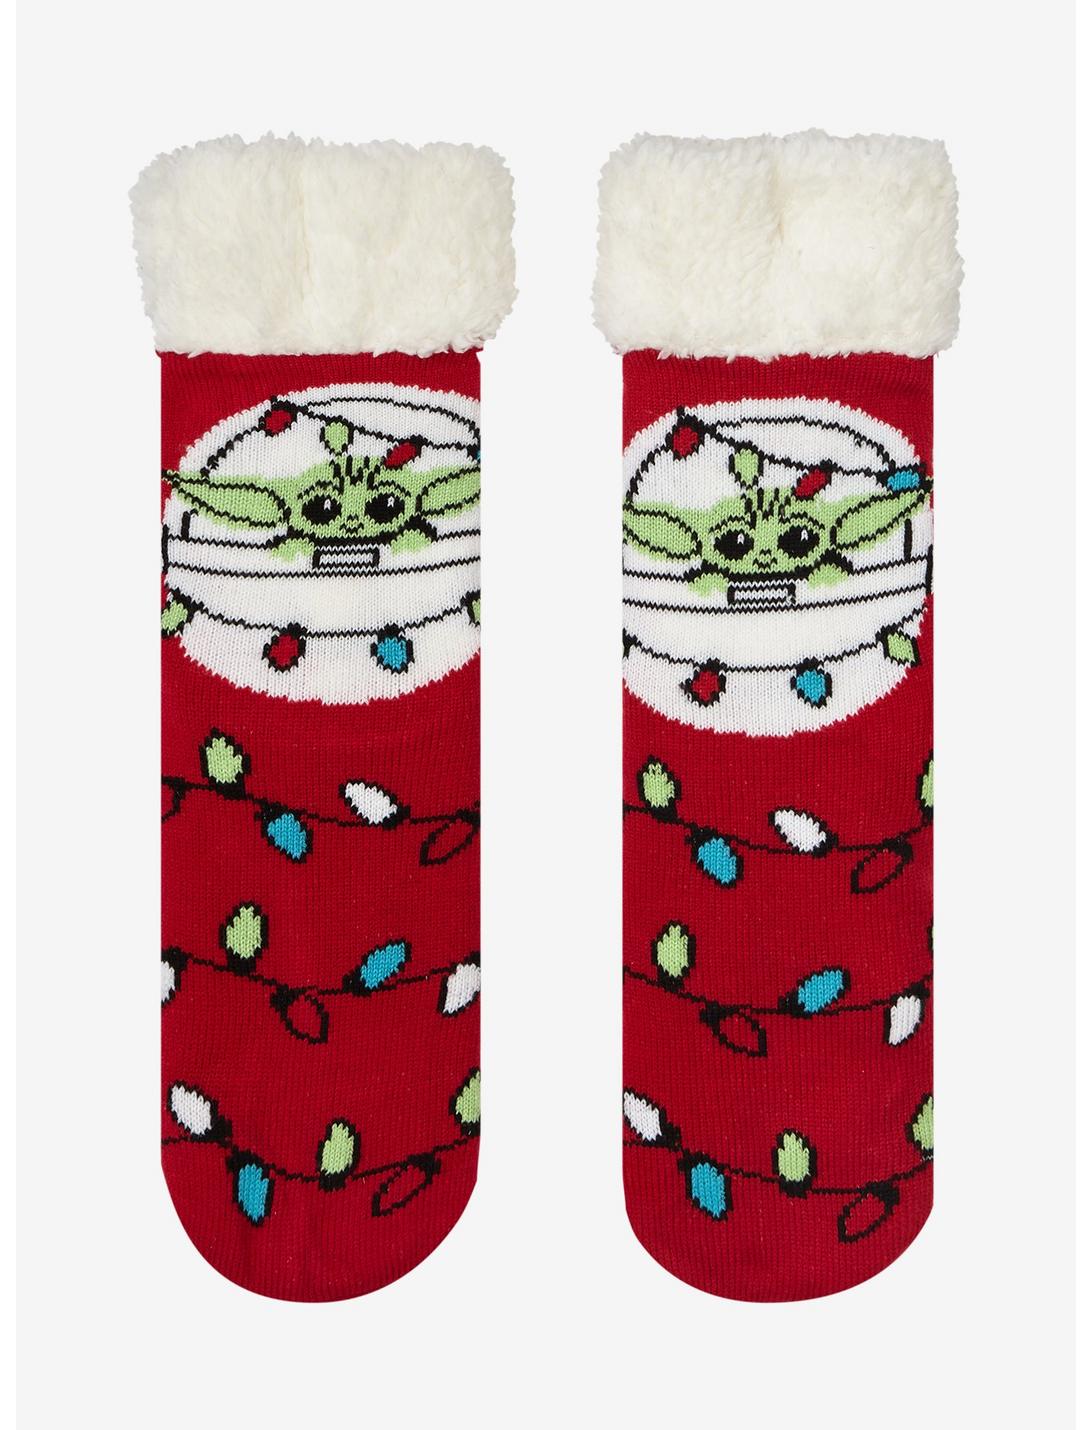 Star Wars The Mandalorian Grogu Holiday Cozy Slipper Socks, , hi-res